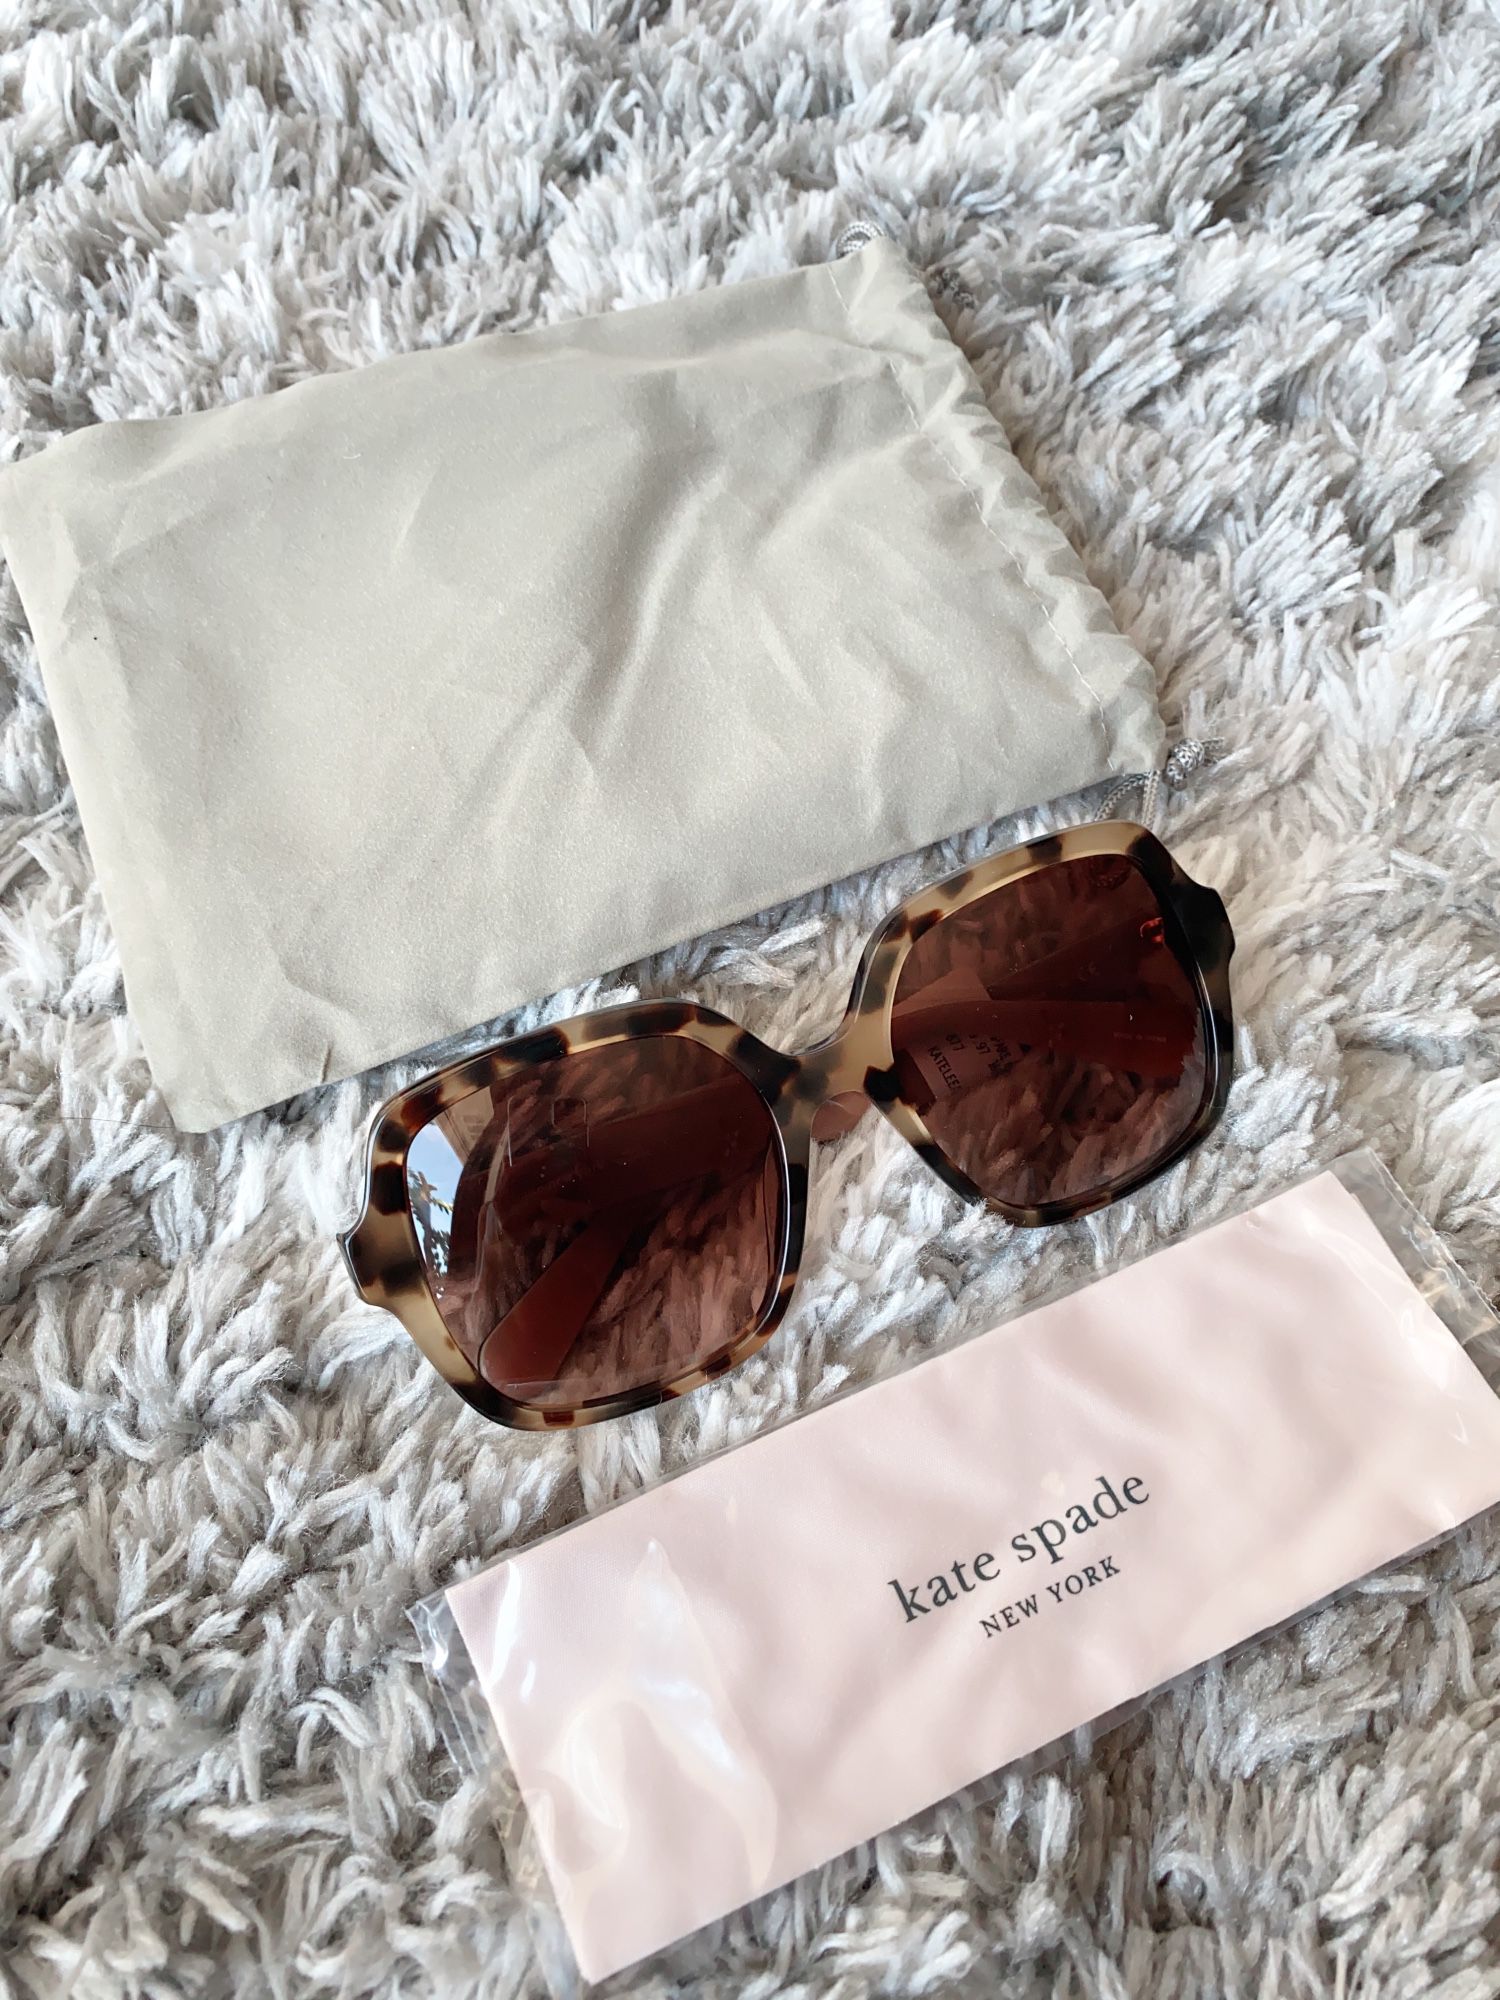 Brand New Kate Spade Sunglasses 